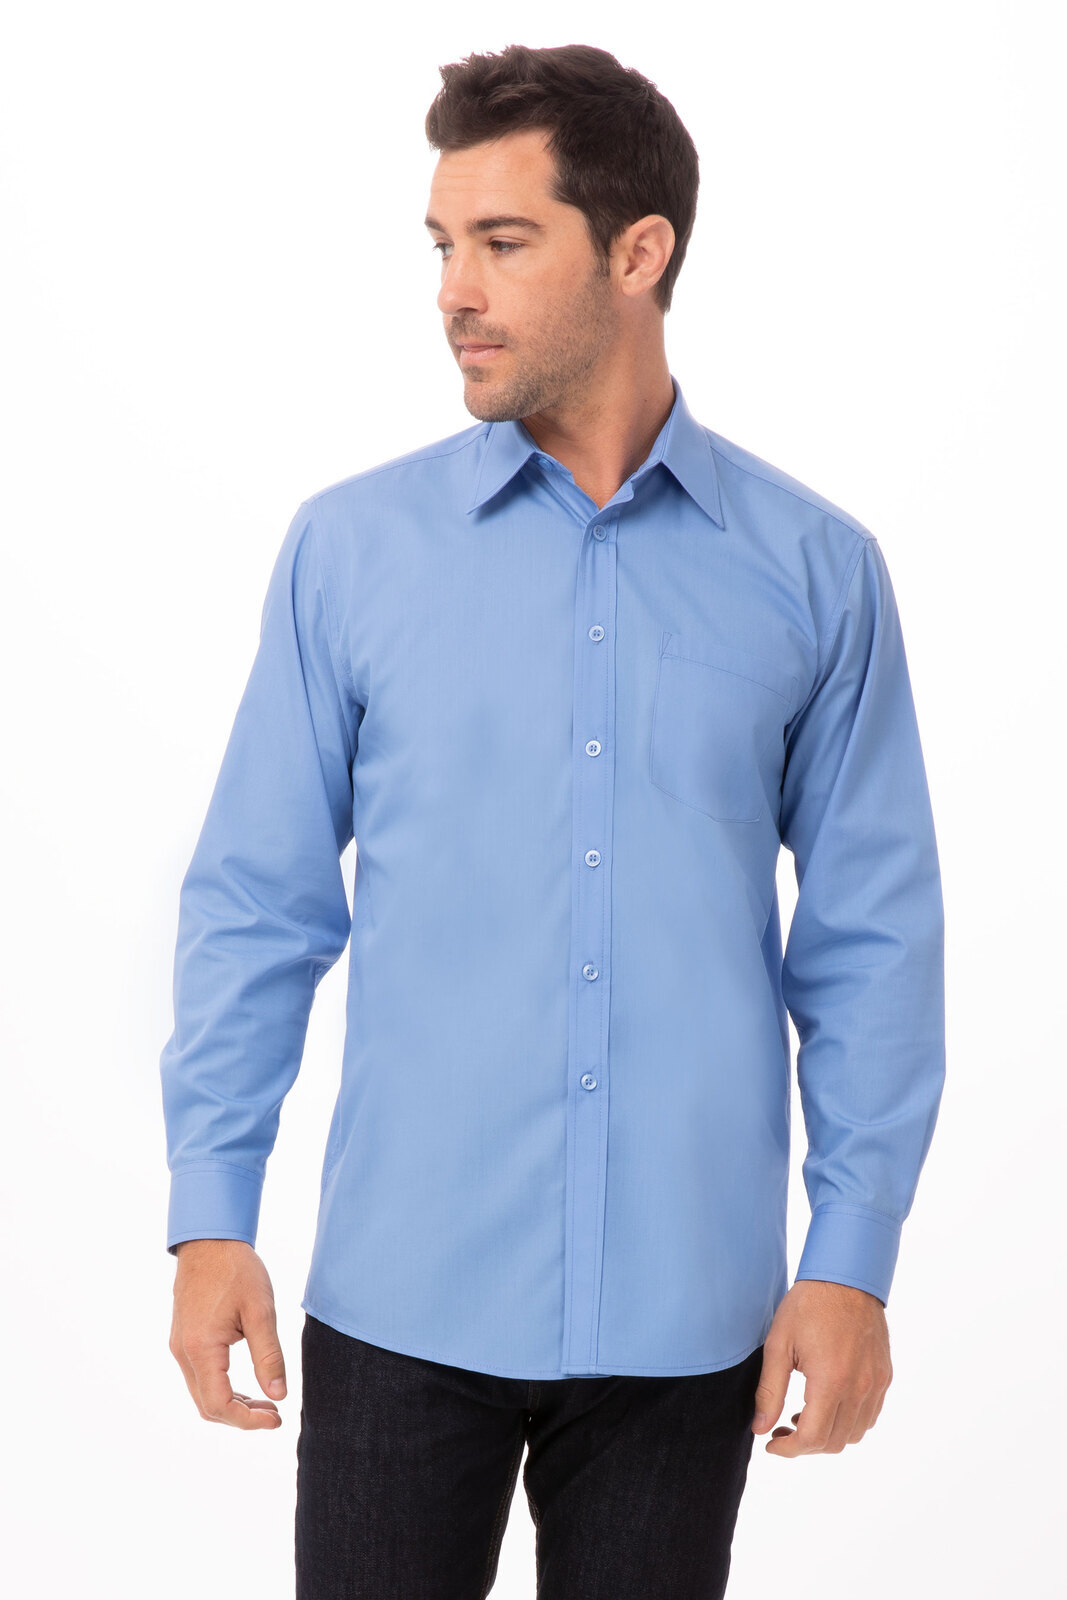 Men's French Blue Dress Shirt | Chef Works Australia